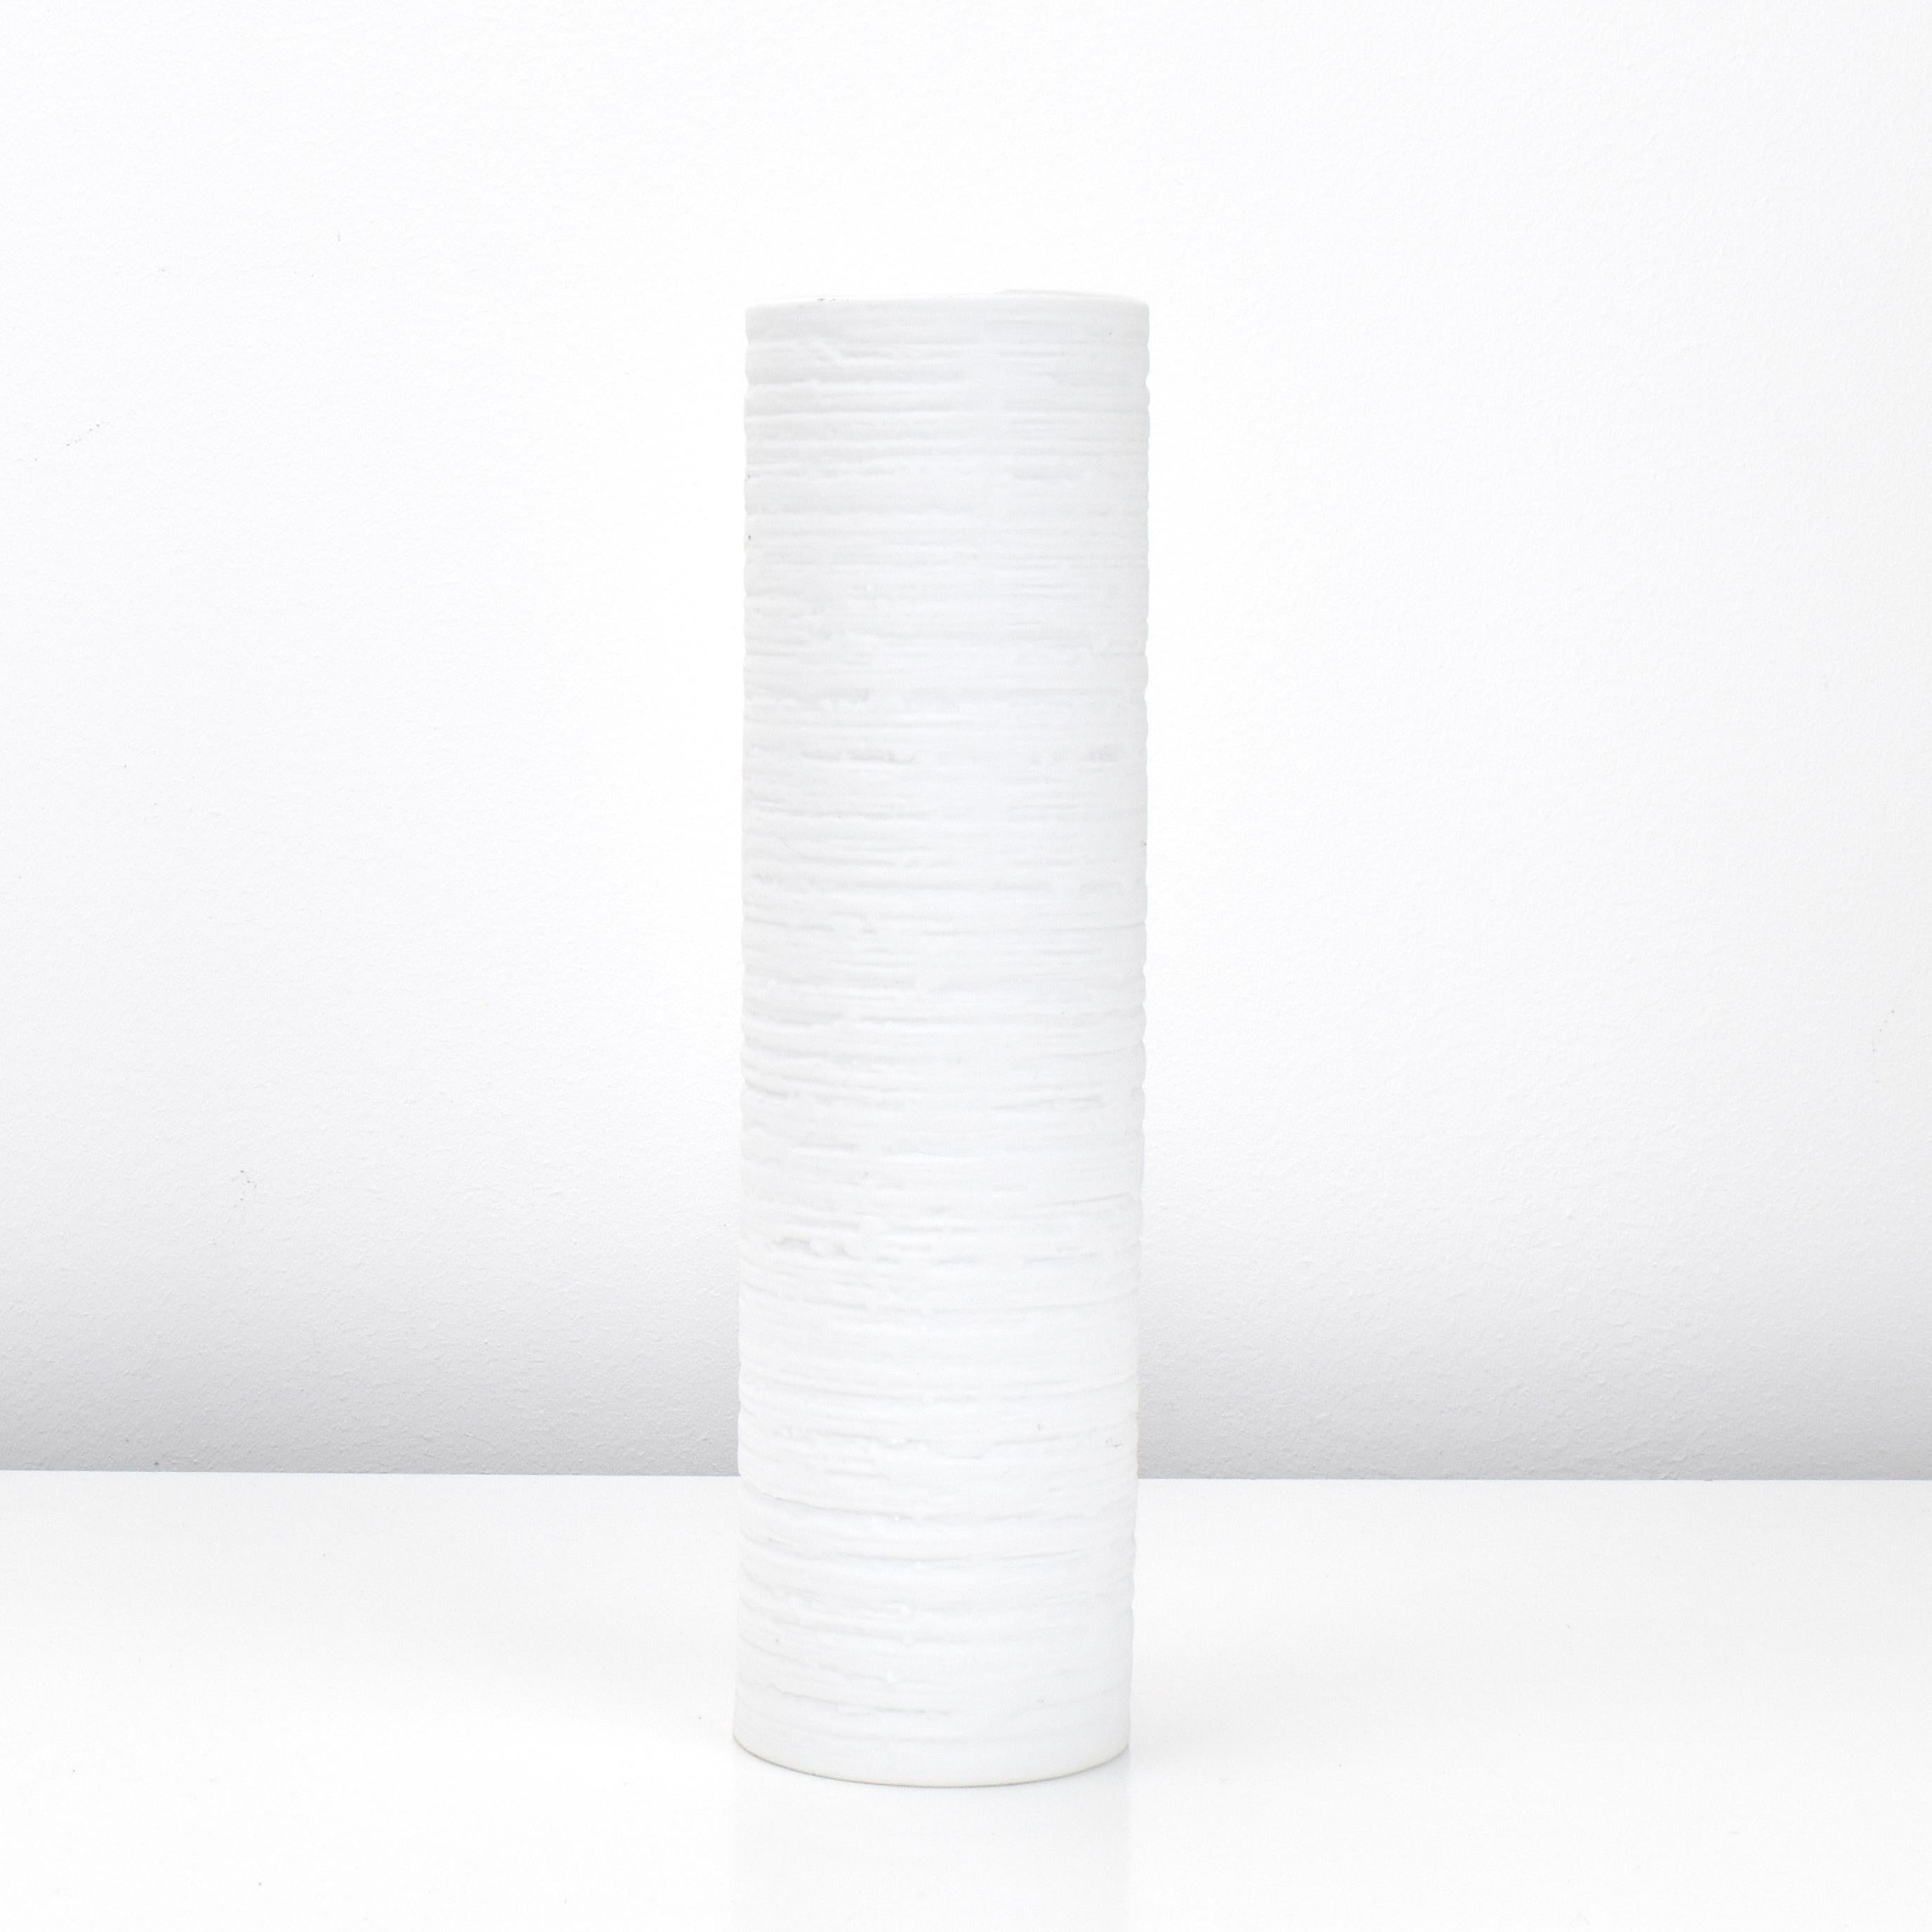 German Arzberg Op Art White Bisque Porcelain Vase Concrete Pattern Surface For Sale